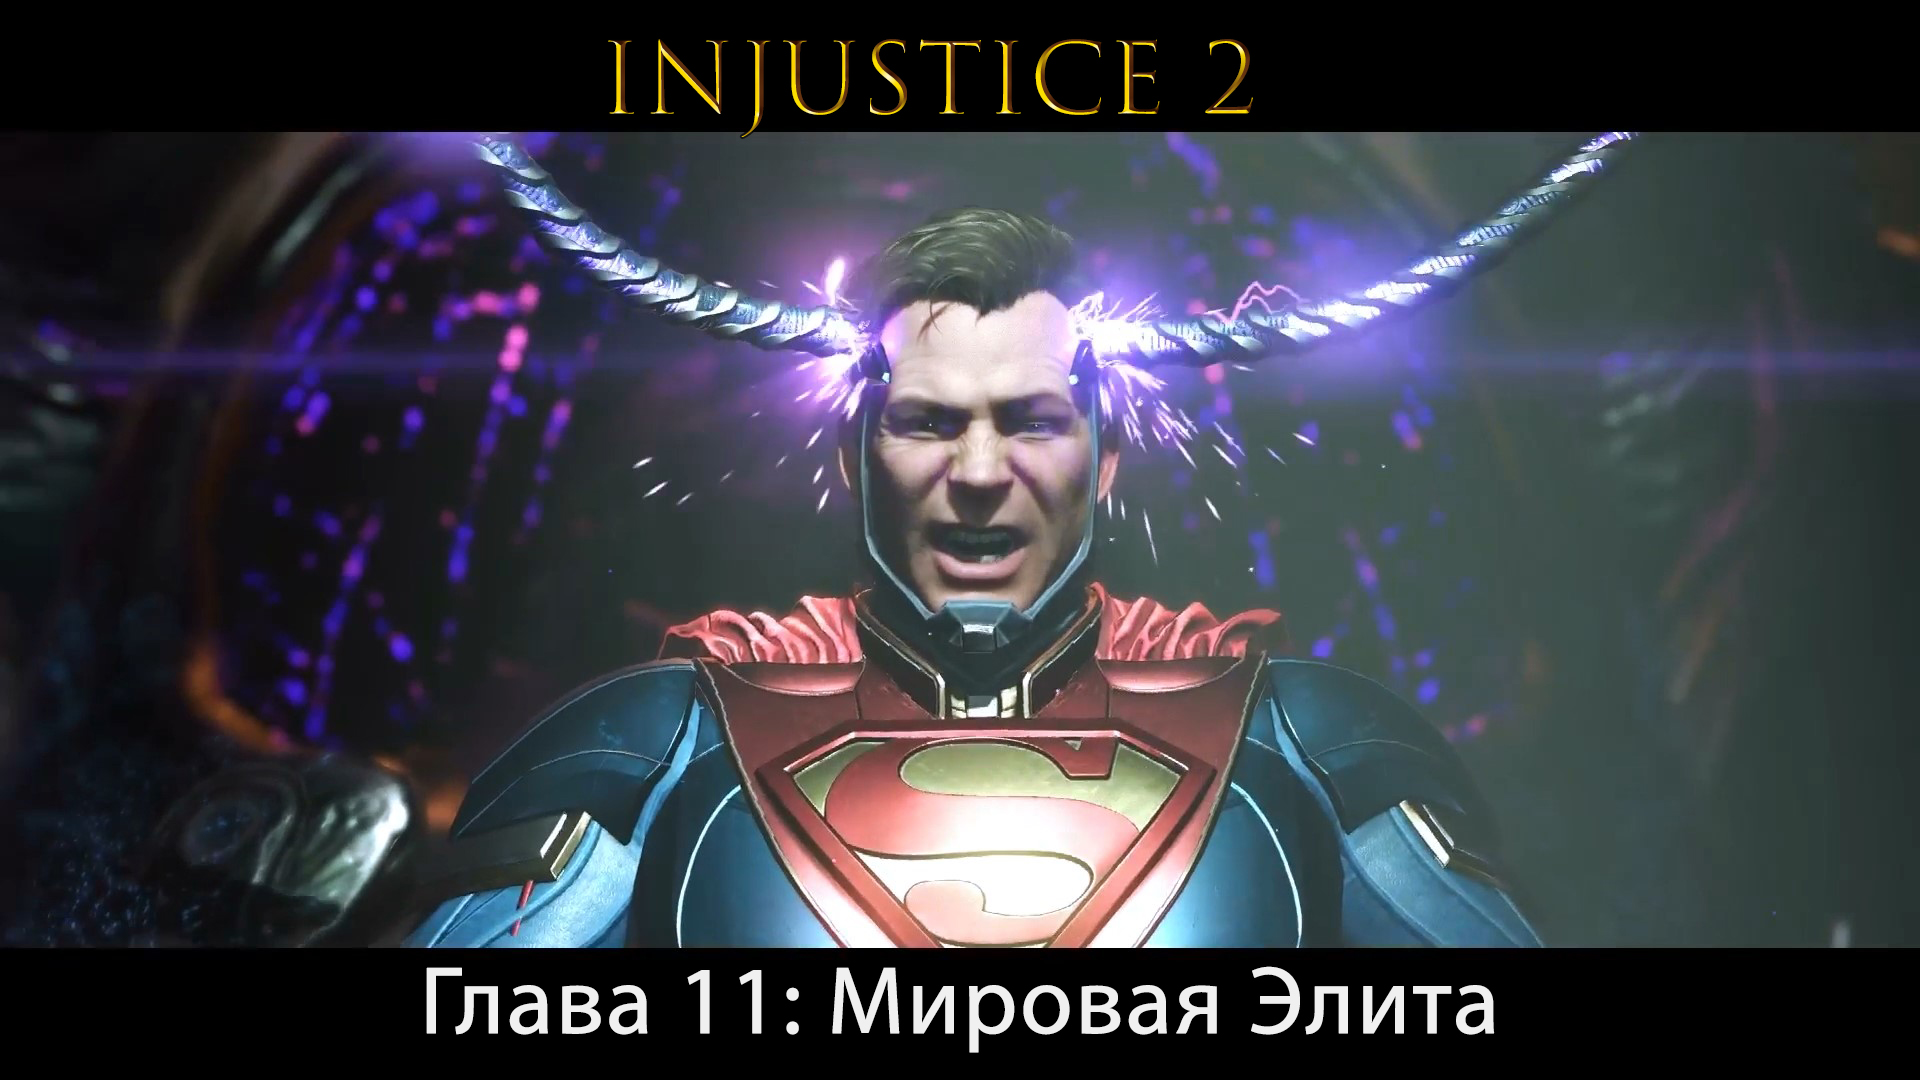 Injustice 2 - Глава 11: Мировая Элита - Бэтмен и Супермен (Сюжет) (Gameplay)